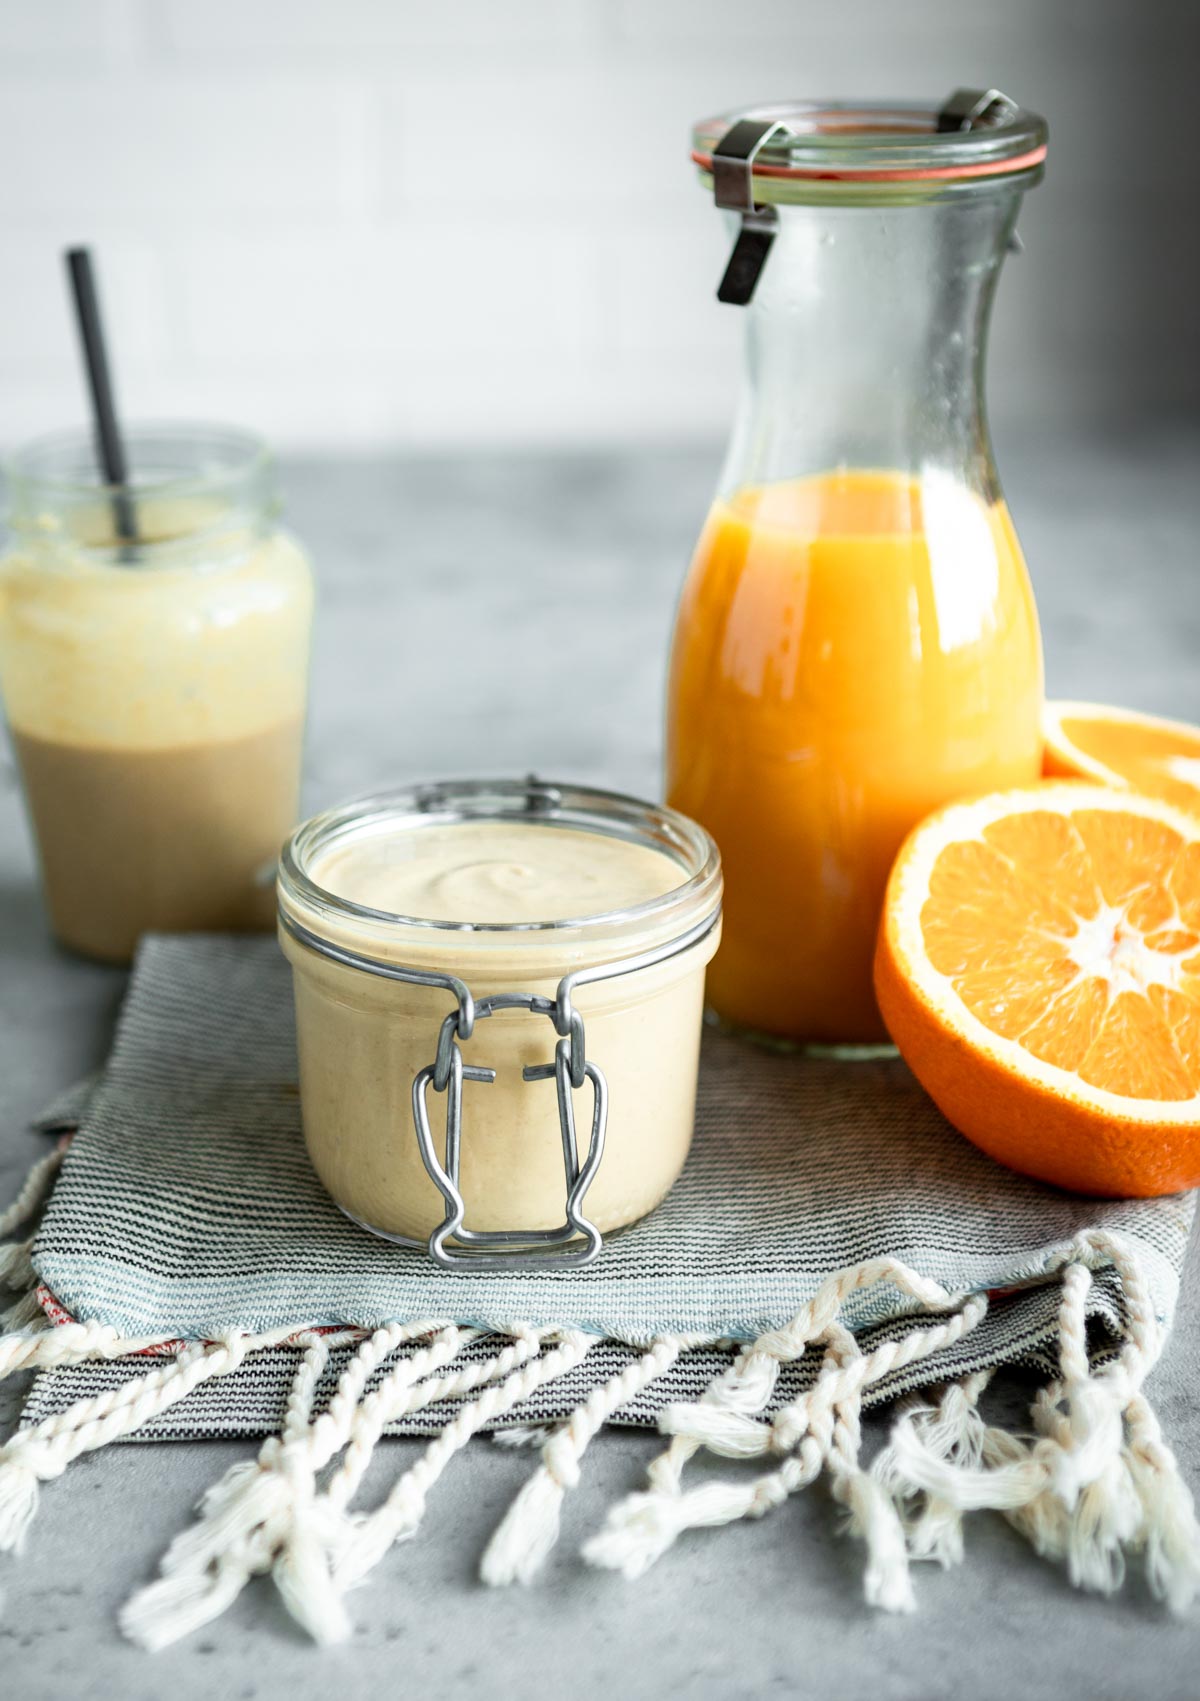 tahini dressing homemade in a glass jar next to oranges and fresh orange juice.